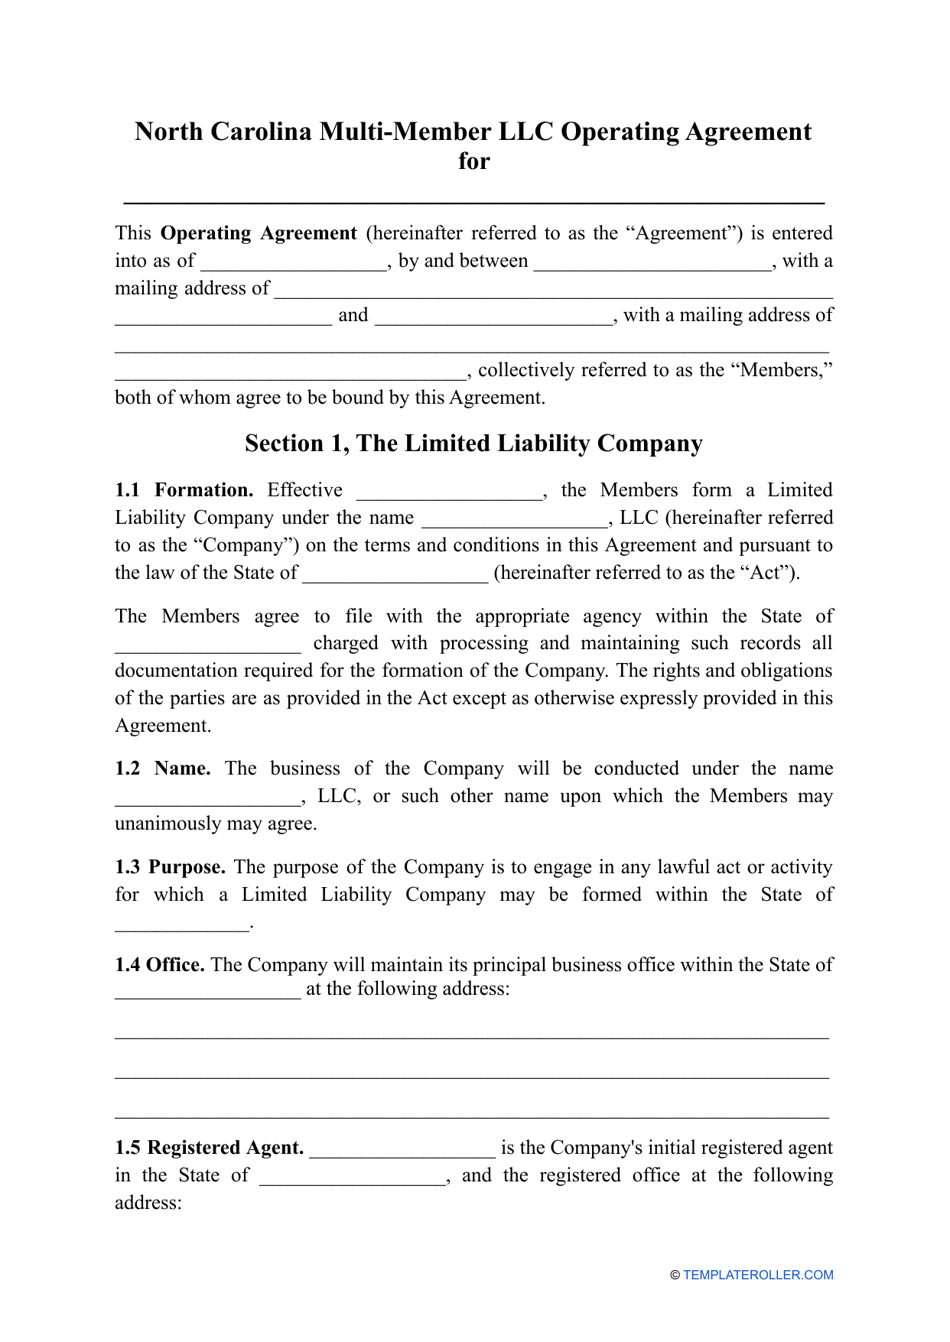 Multi-Member LLC Operating Agreement Template - North Carolina, Page 1